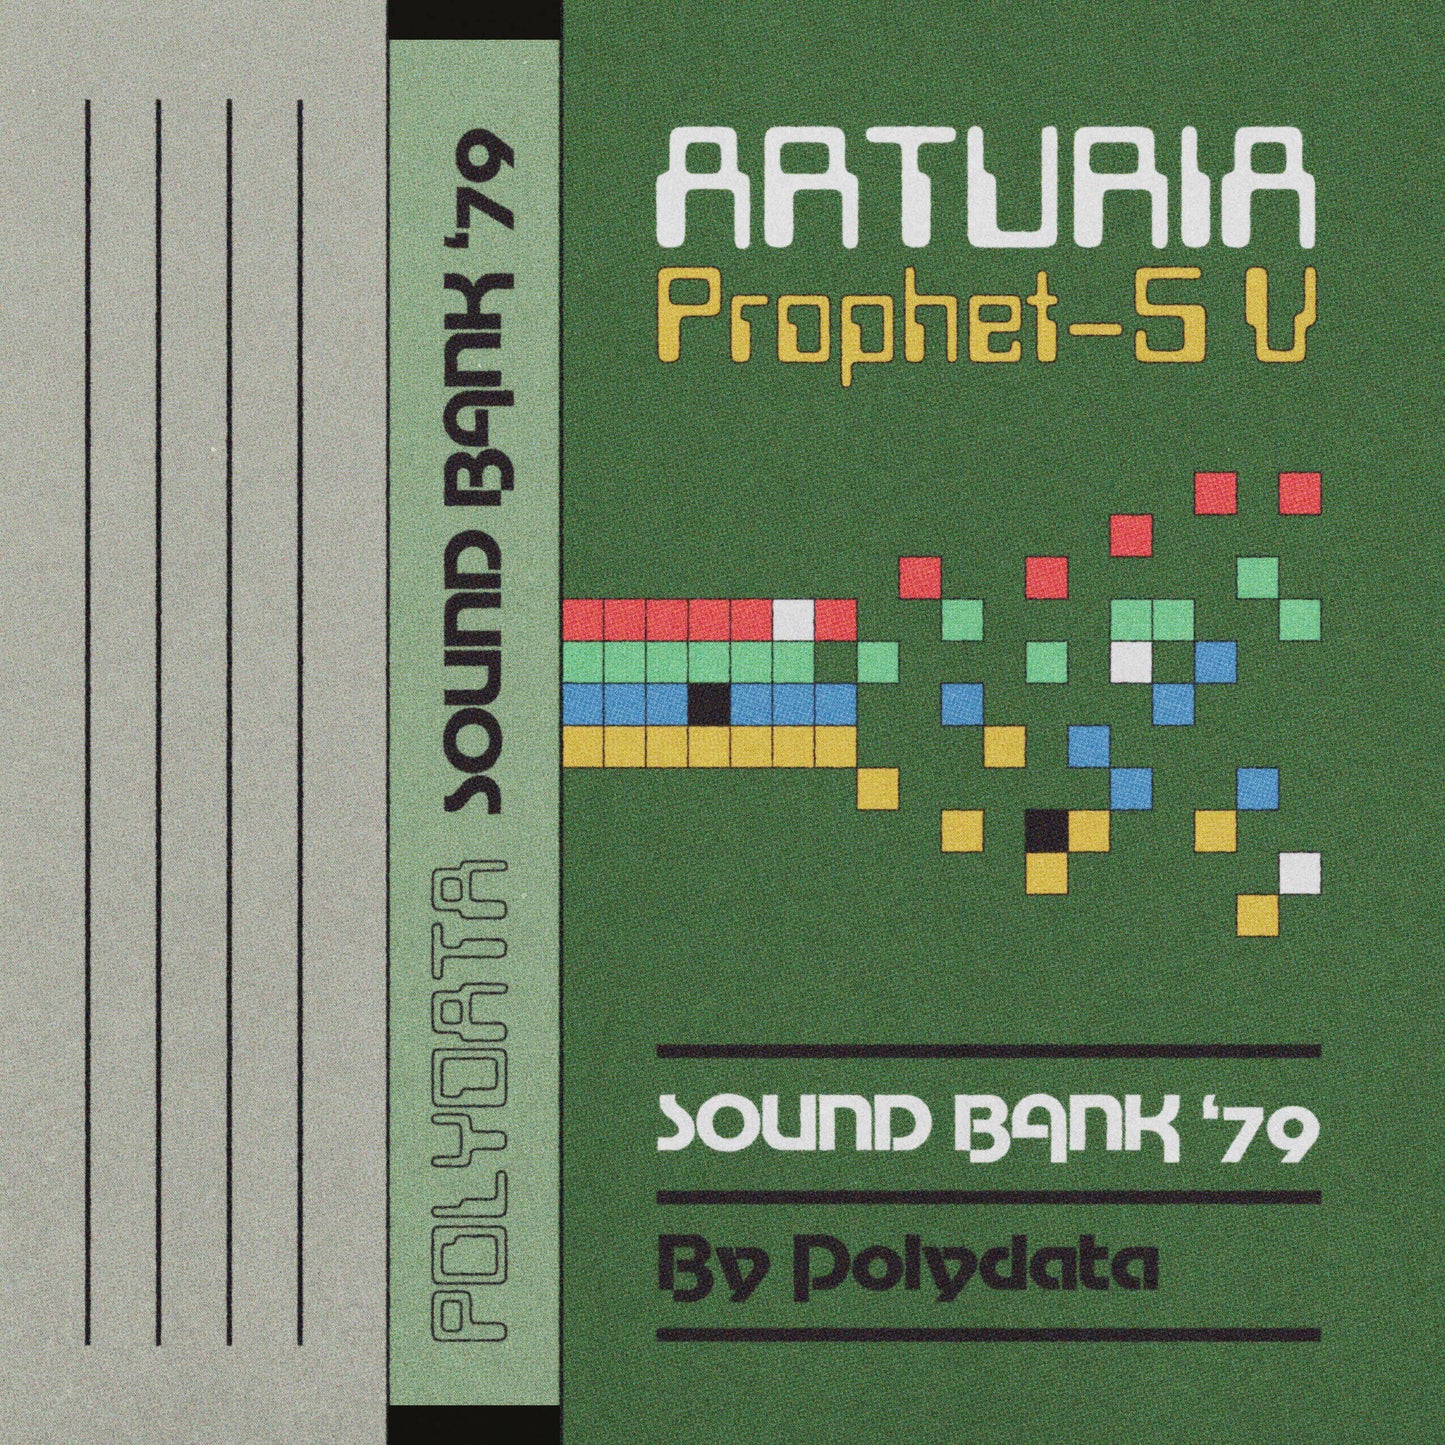 Arturia Prophet-5 V - Sound Bank '79